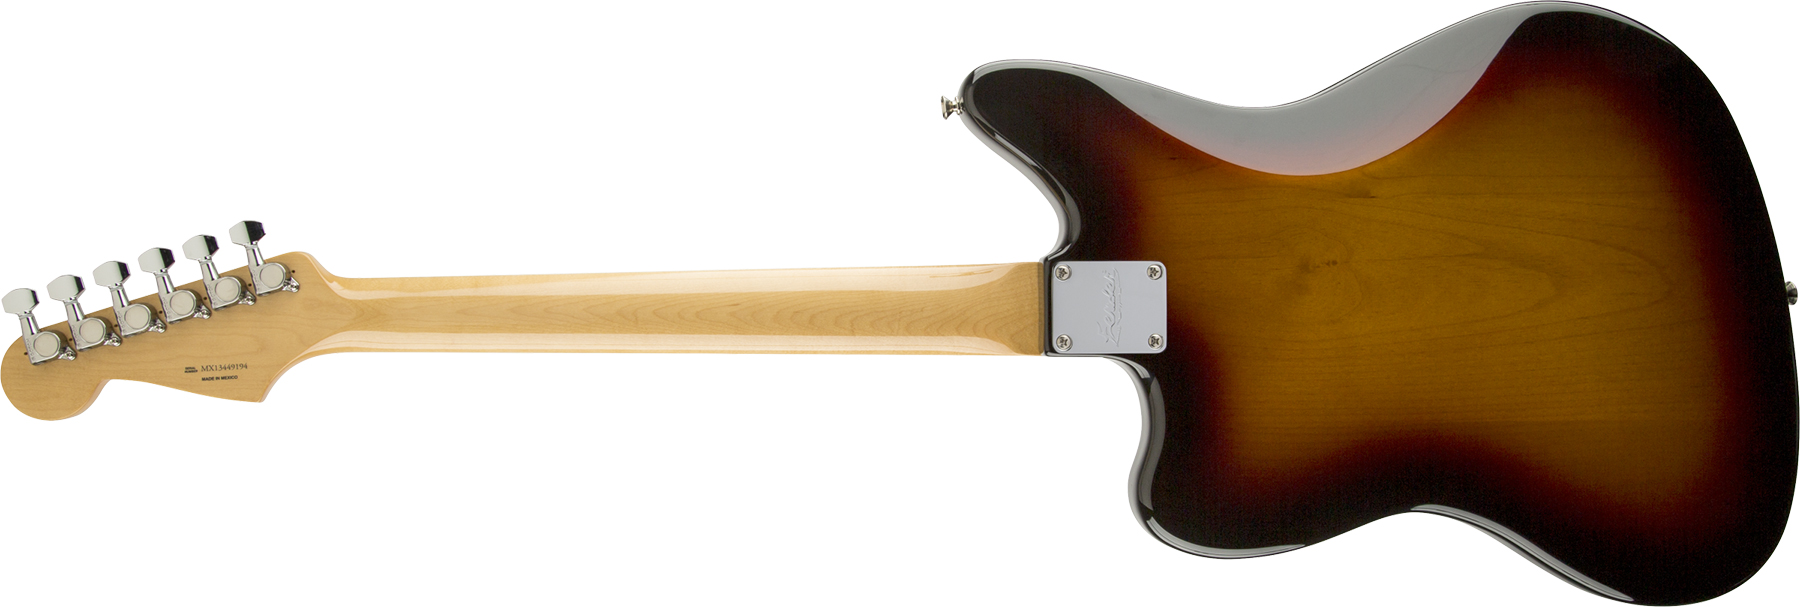 Fender Kurt Cobain Jaguar Mex Hh Trem Rw - 3-color Sunburst - Retro-rock elektrische gitaar - Variation 1